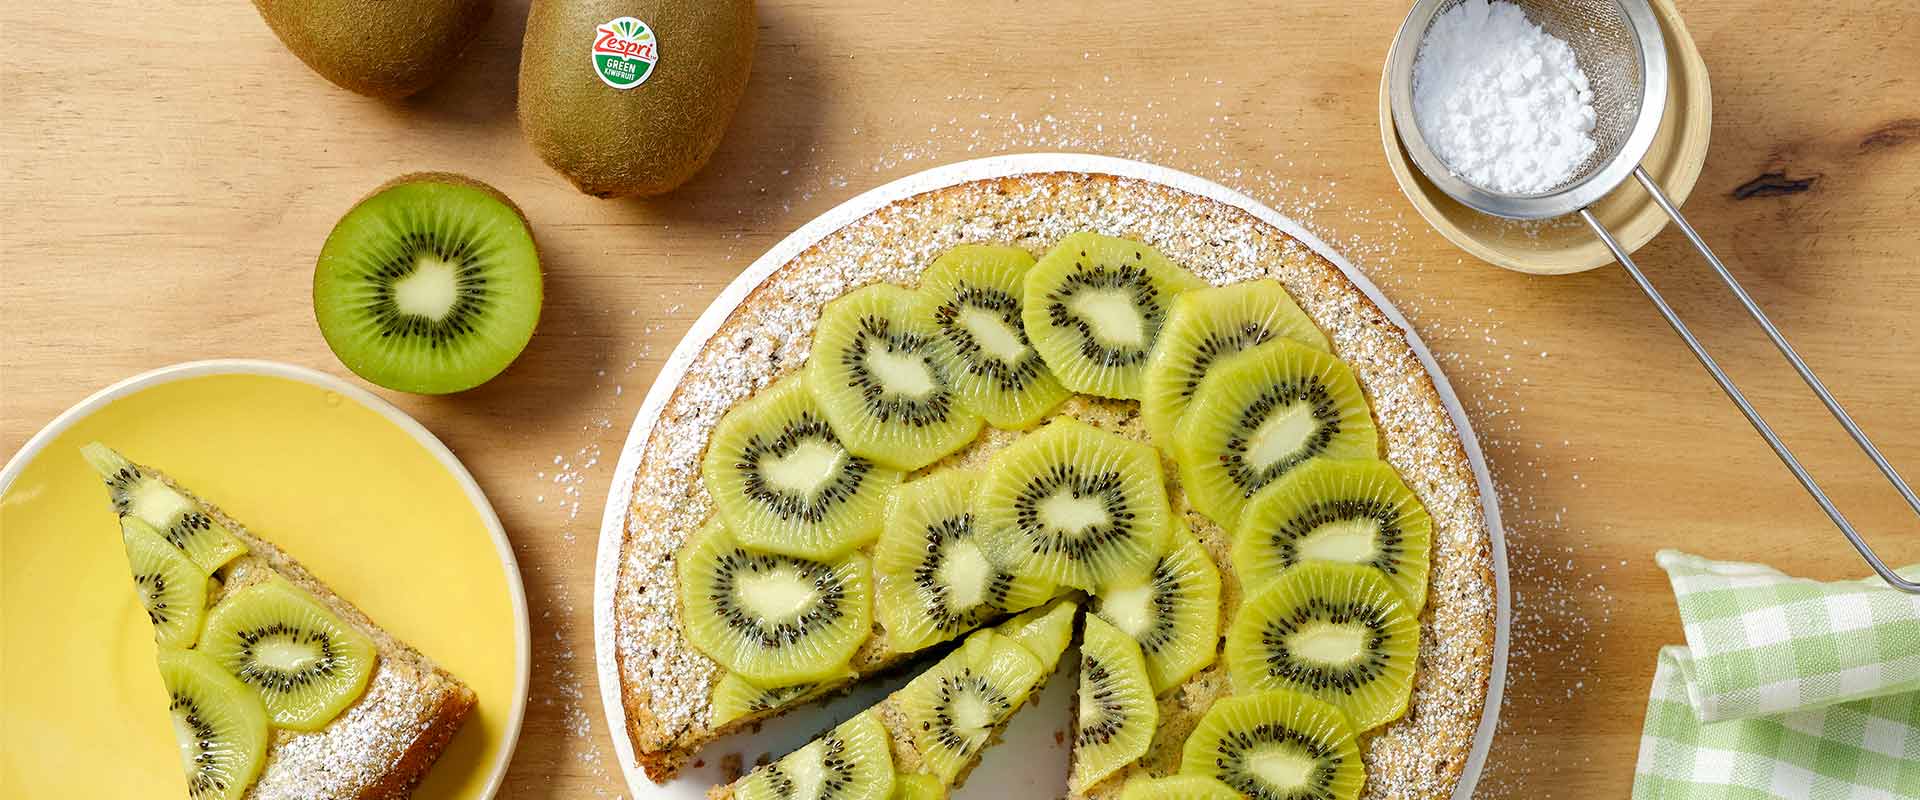 Zespri™ Green kiwi and banana cake with a hint of lemon